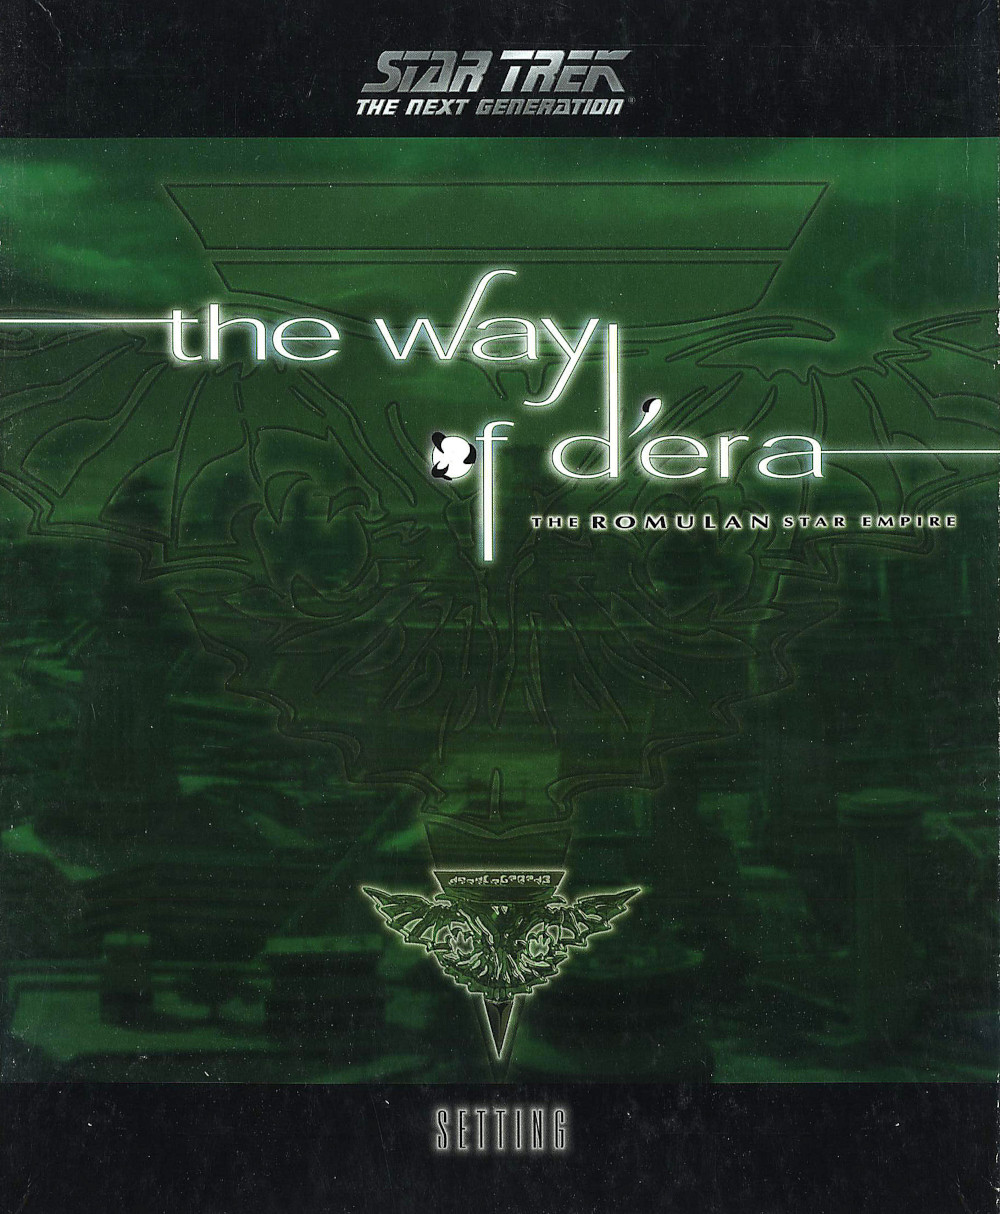 The Way of D'era: The Romulan Star Empire (Apr 1999)